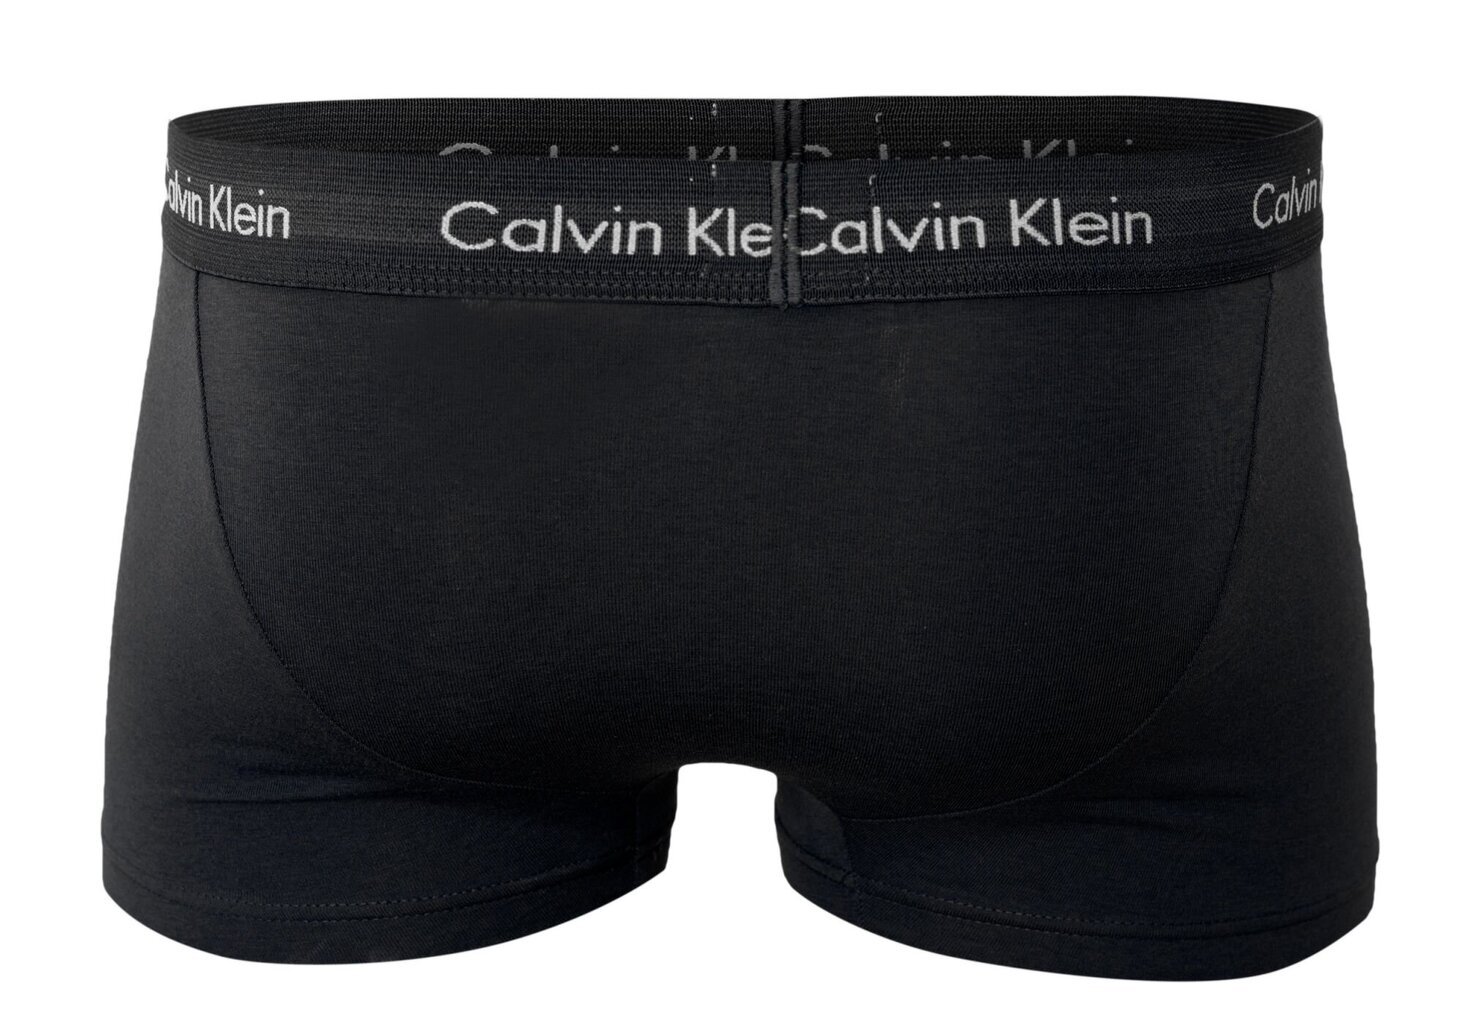 Trumpikės vyrams Calvin Klein, 3 vnt kaina ir informacija | Trumpikės | pigu.lt